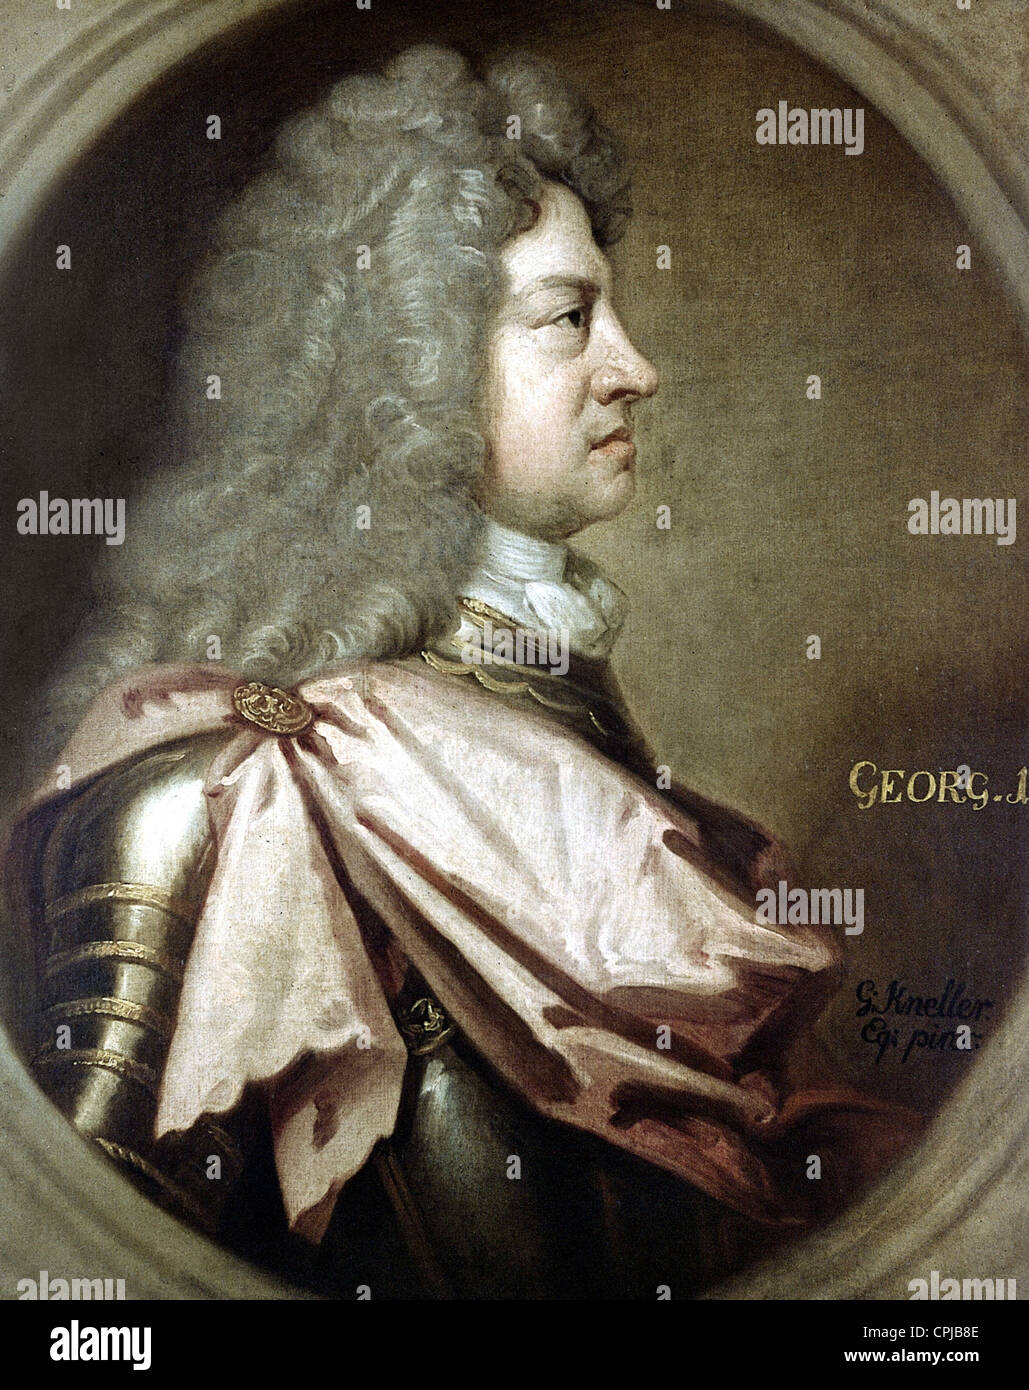 George I, 28.3.1660 - 11.6.1727, Rey de Gran Bretaña 1714 - 1727, retrato, cara lateral, pintura contemporánea, Foto de stock